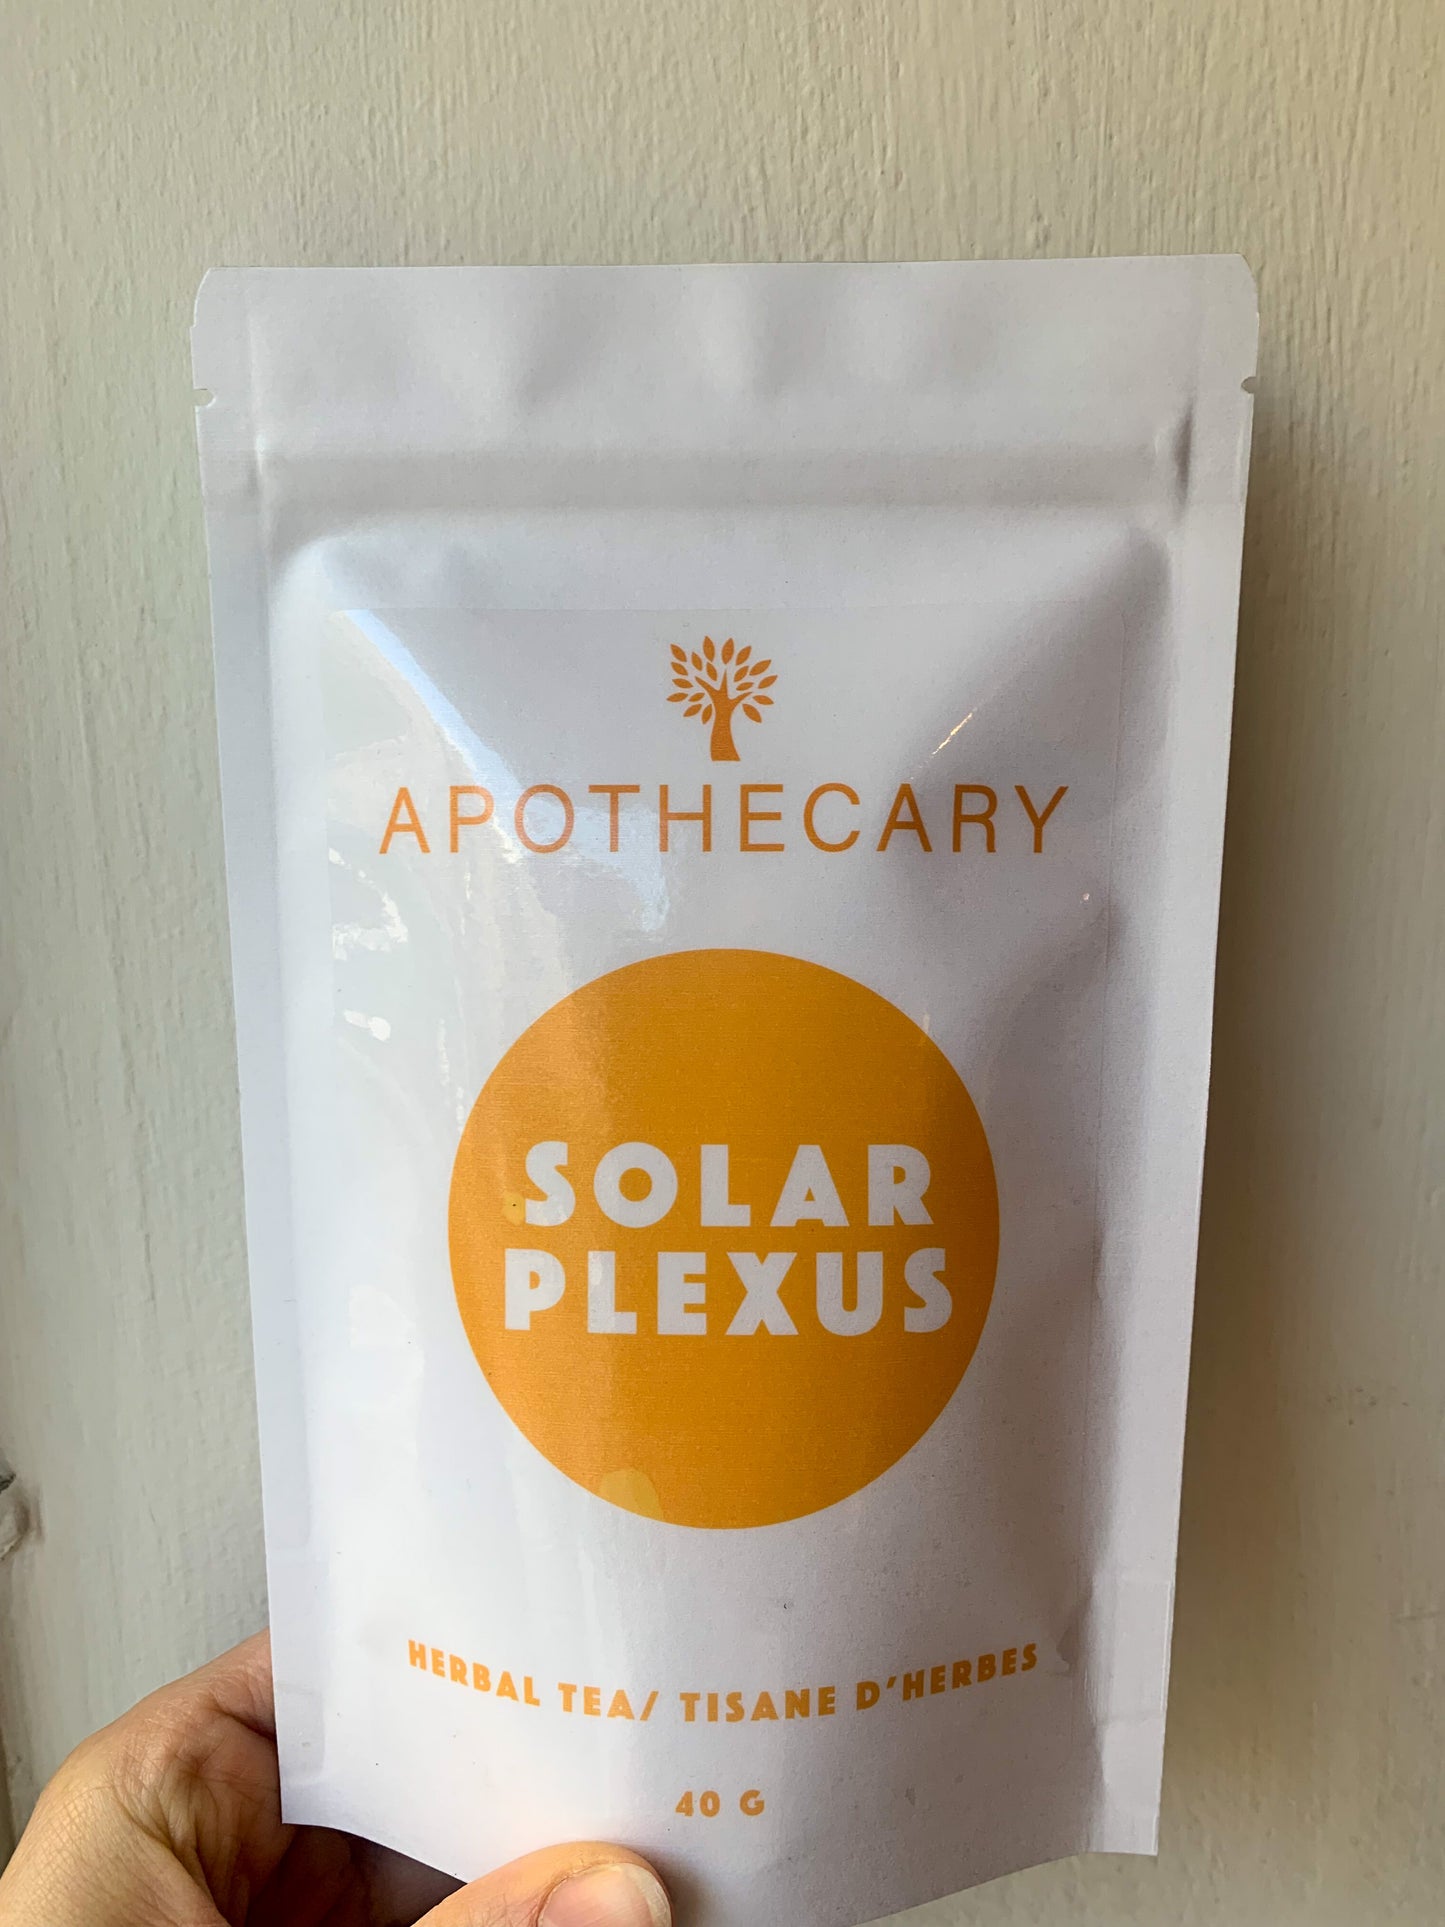 The Apothecary Solar Plexus Herbal Tea